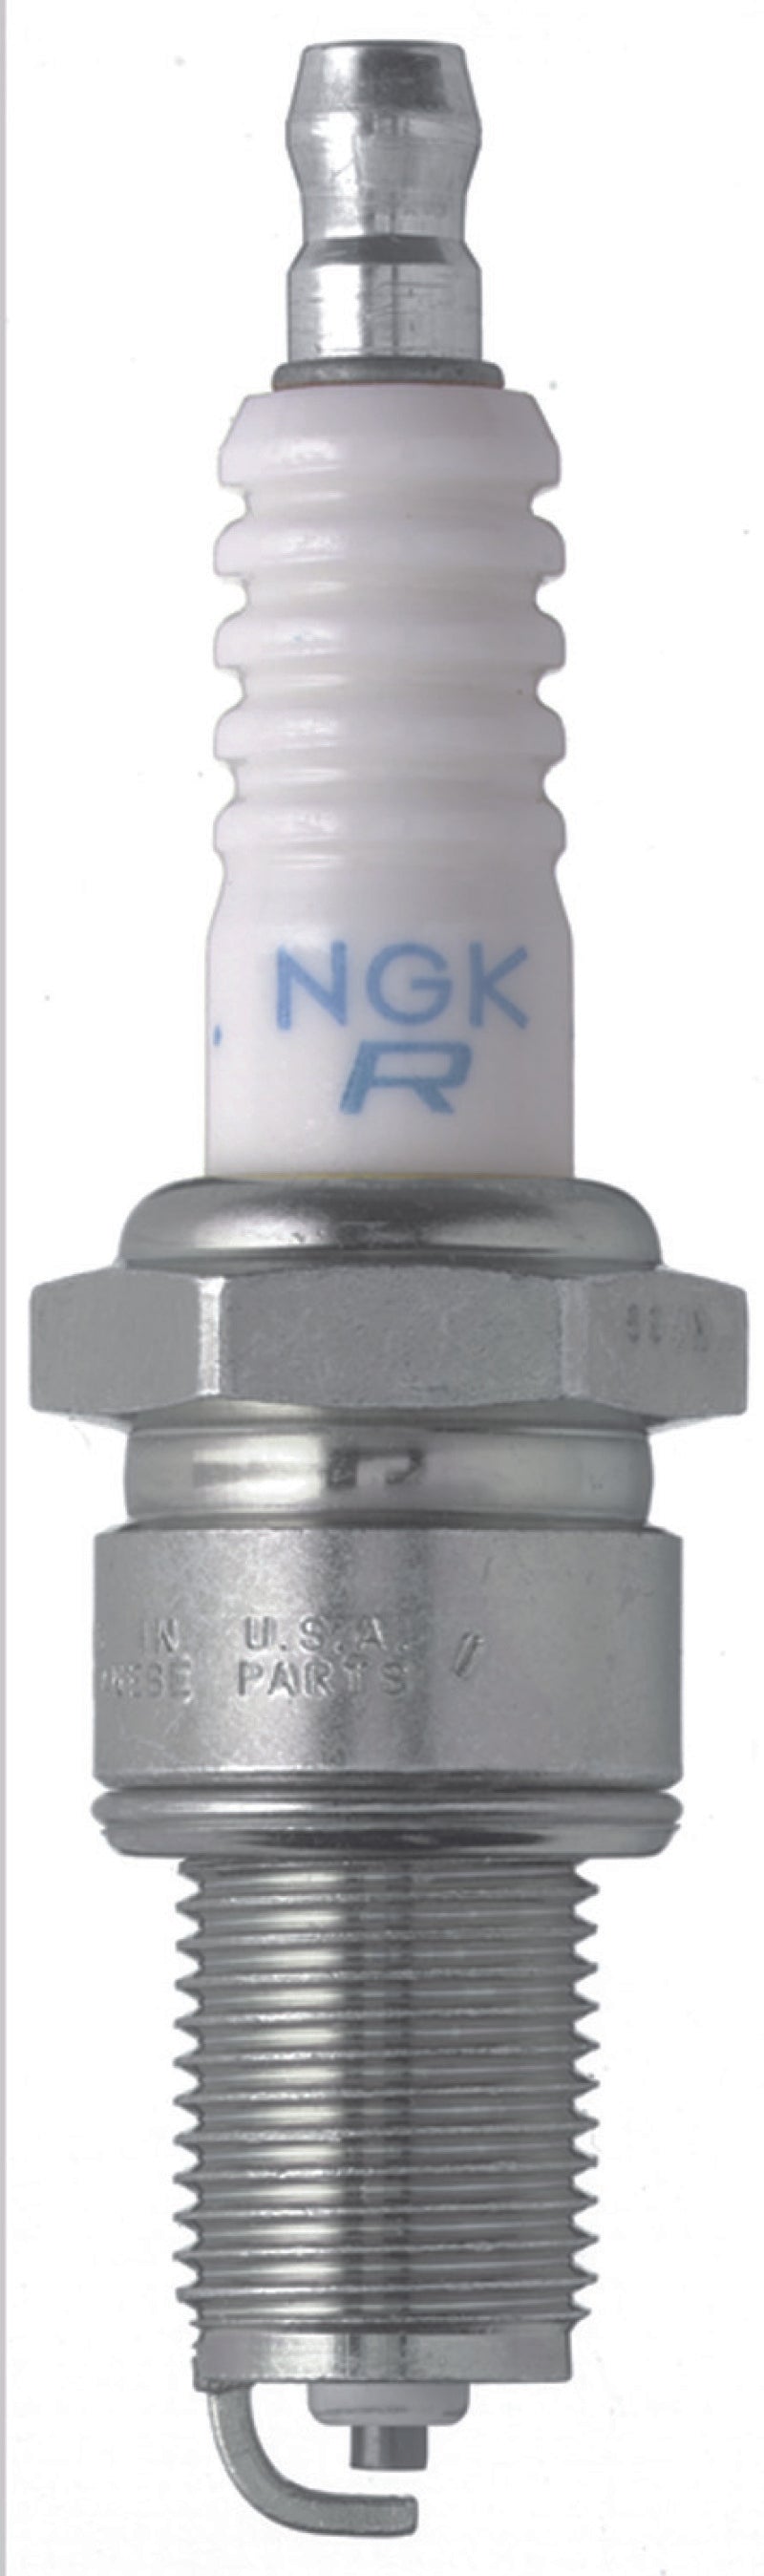 NGK Traditional Spark Plug Box of 4 (BPR6ES).